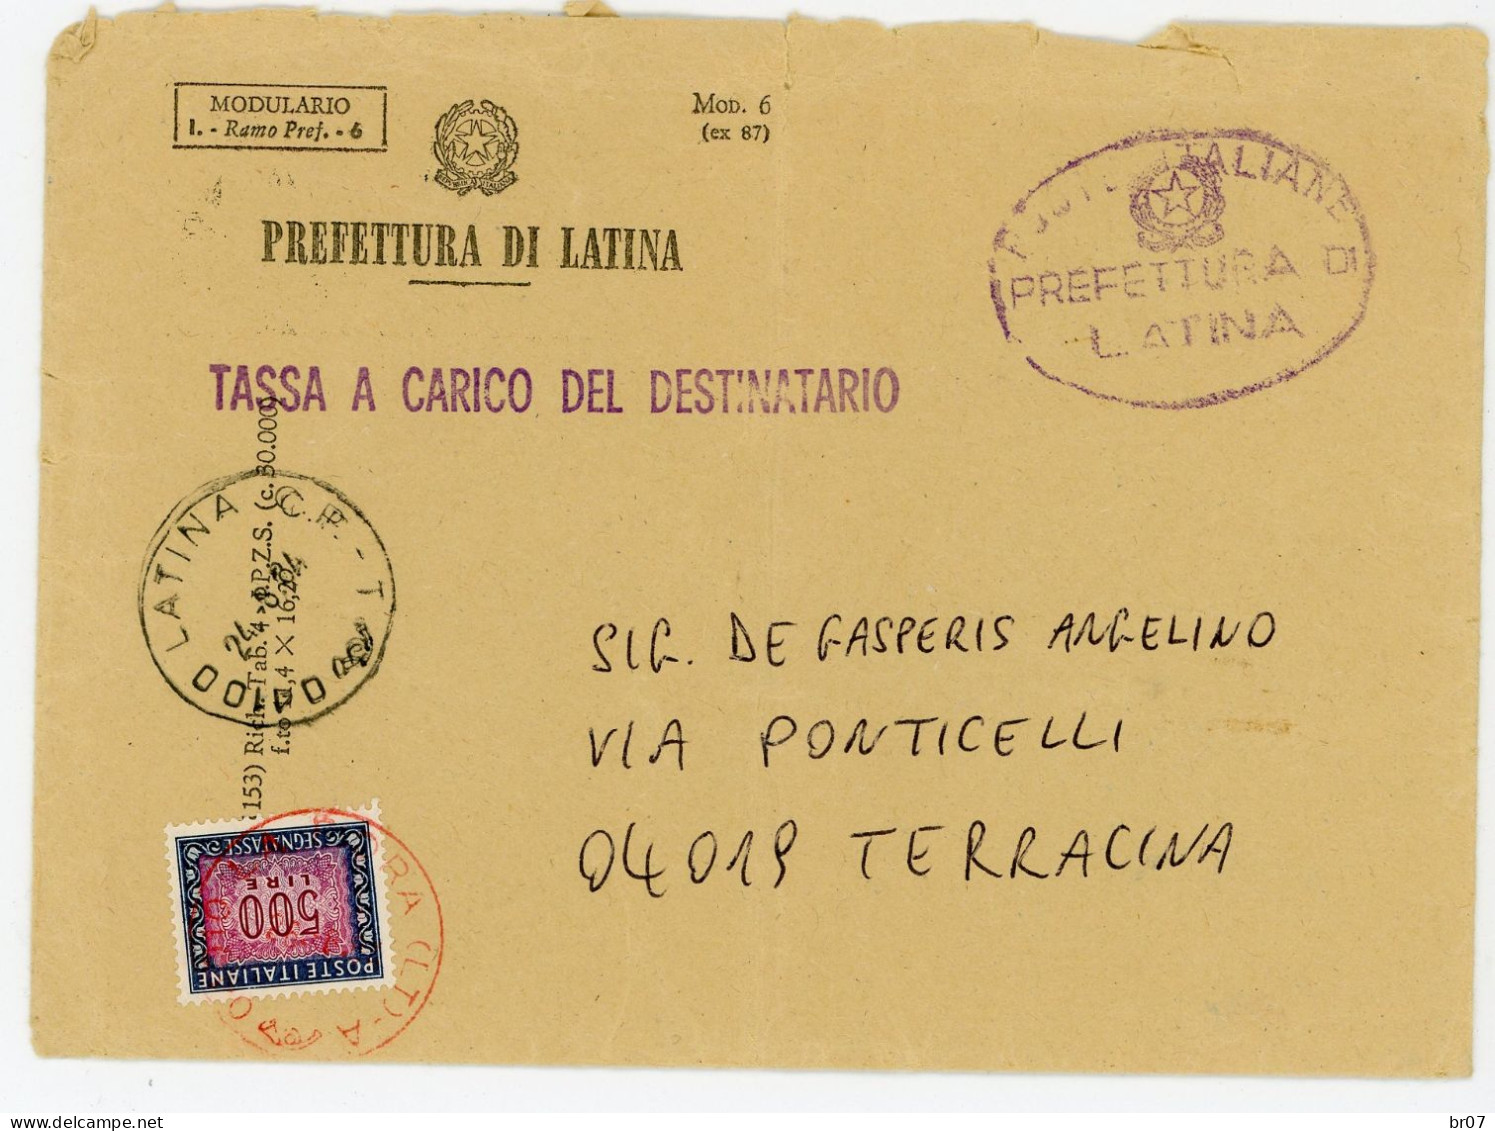 ITALIE ENV 1984 PREFETTURA DI LATINA TAXE A CHARGE DU DESTINATAIRE 500 LIRES TERRACINA TASSA A CARICO DEL DESTINATARIO - 1981-90: Poststempel